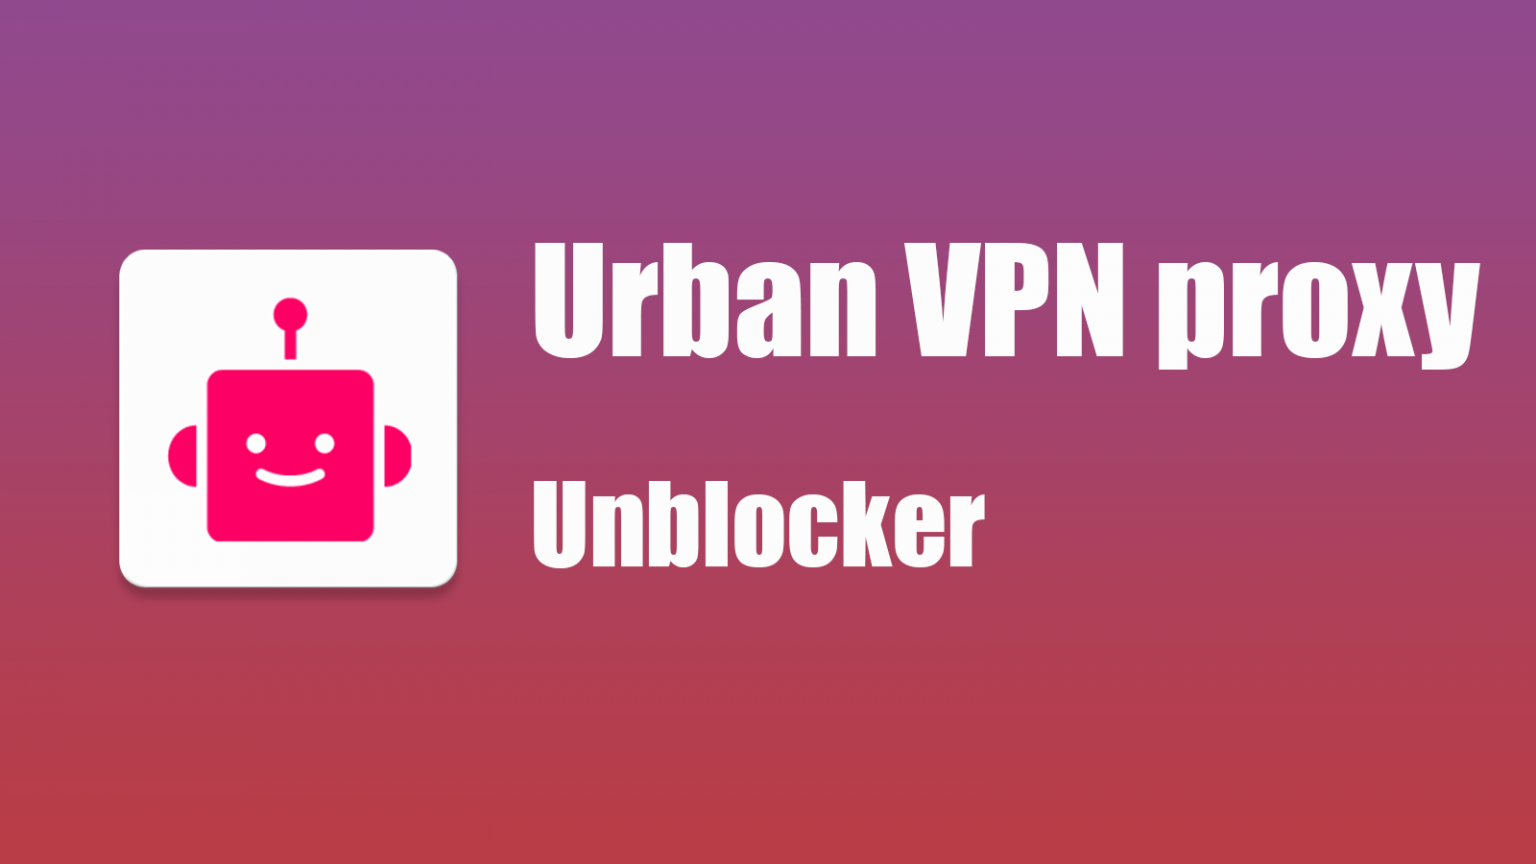 Urban VPN proxy Unblocker - Alann